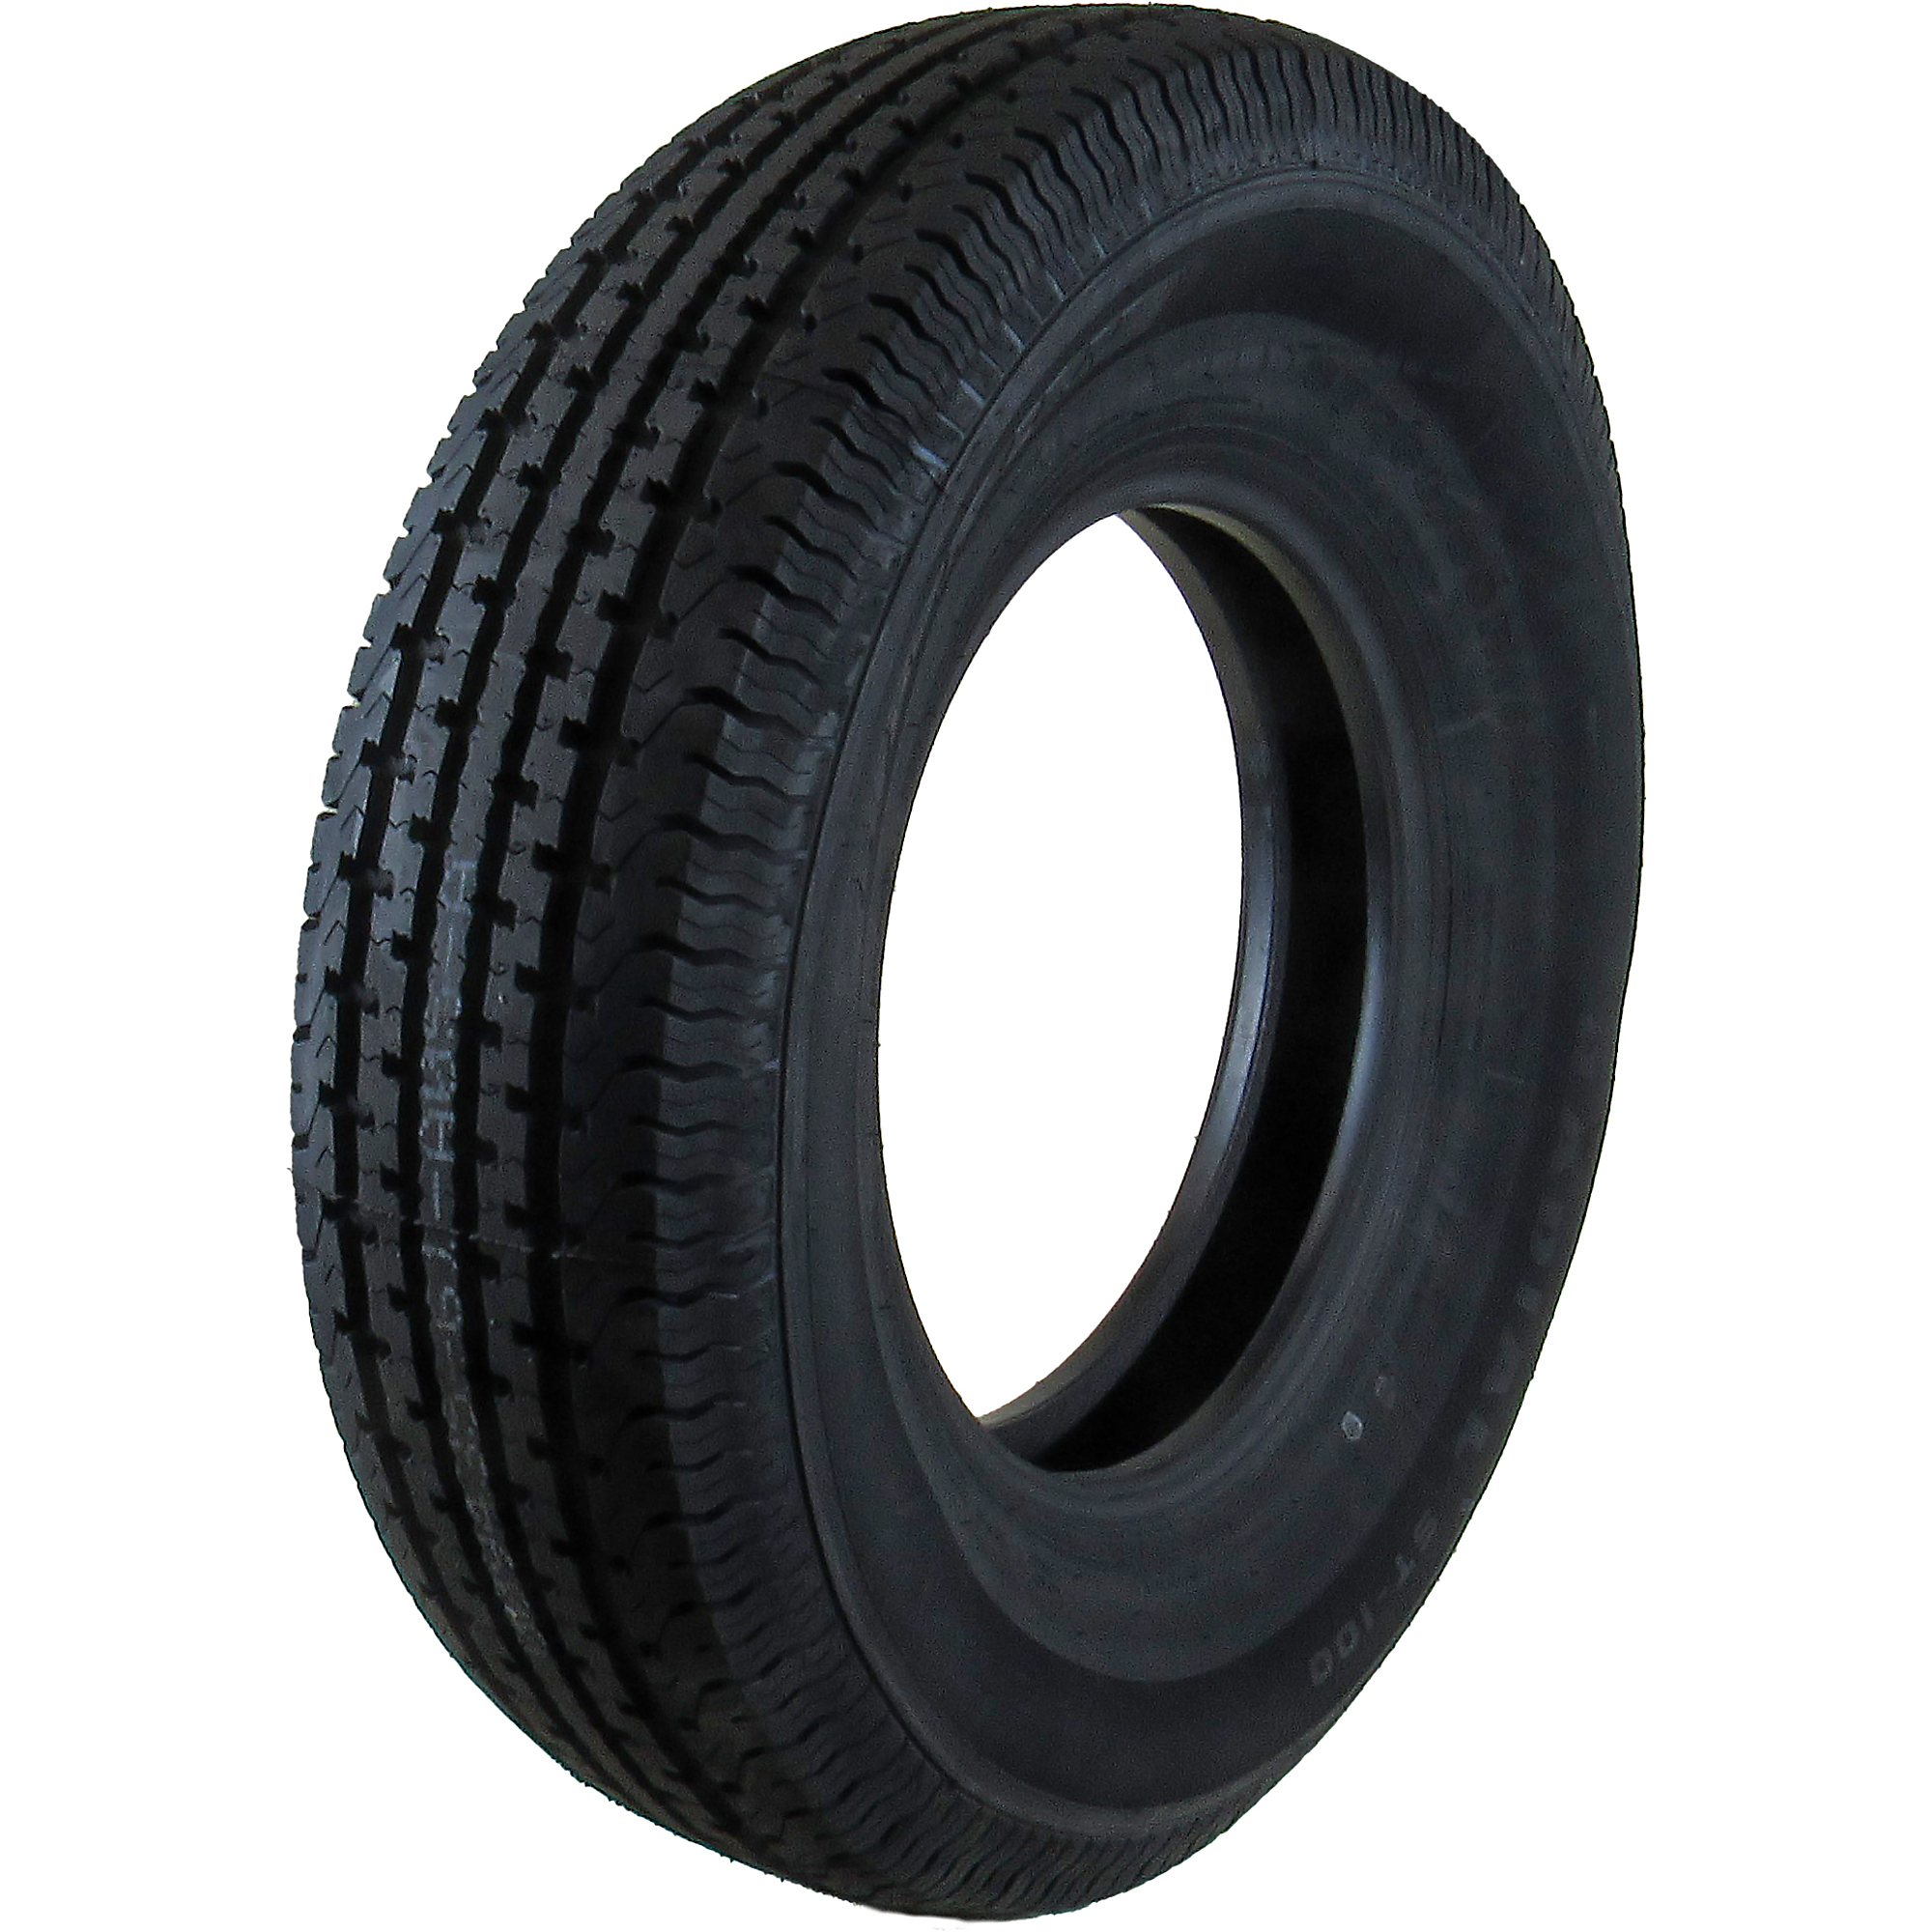 HI-RUN, Highway Trailer Tire, Radial-ply, Tire Size ST205/75R15 Load Range Rating D, Model HZT1005